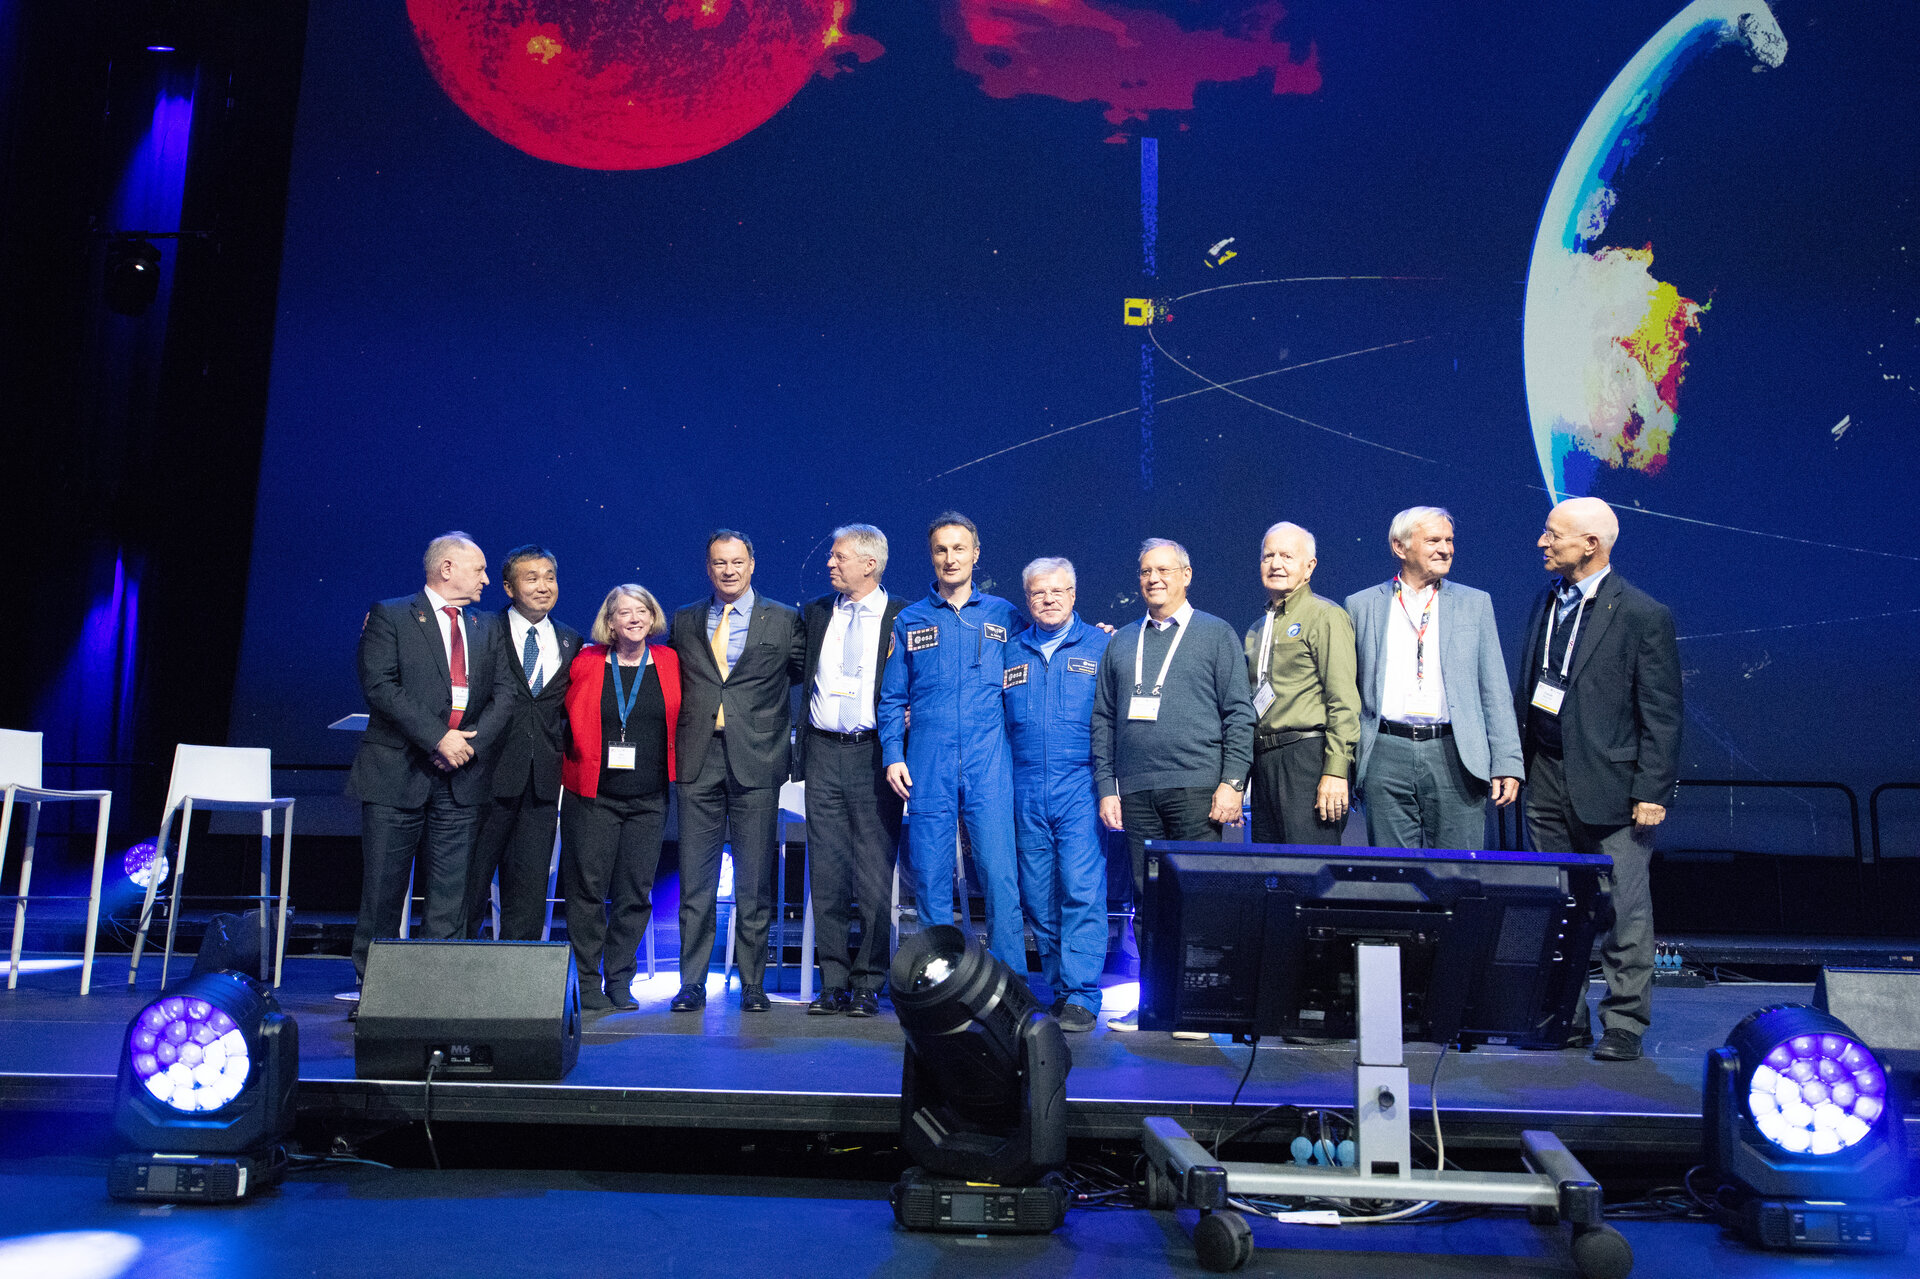 IAC2018 Public Day, Association of Space Explorers event